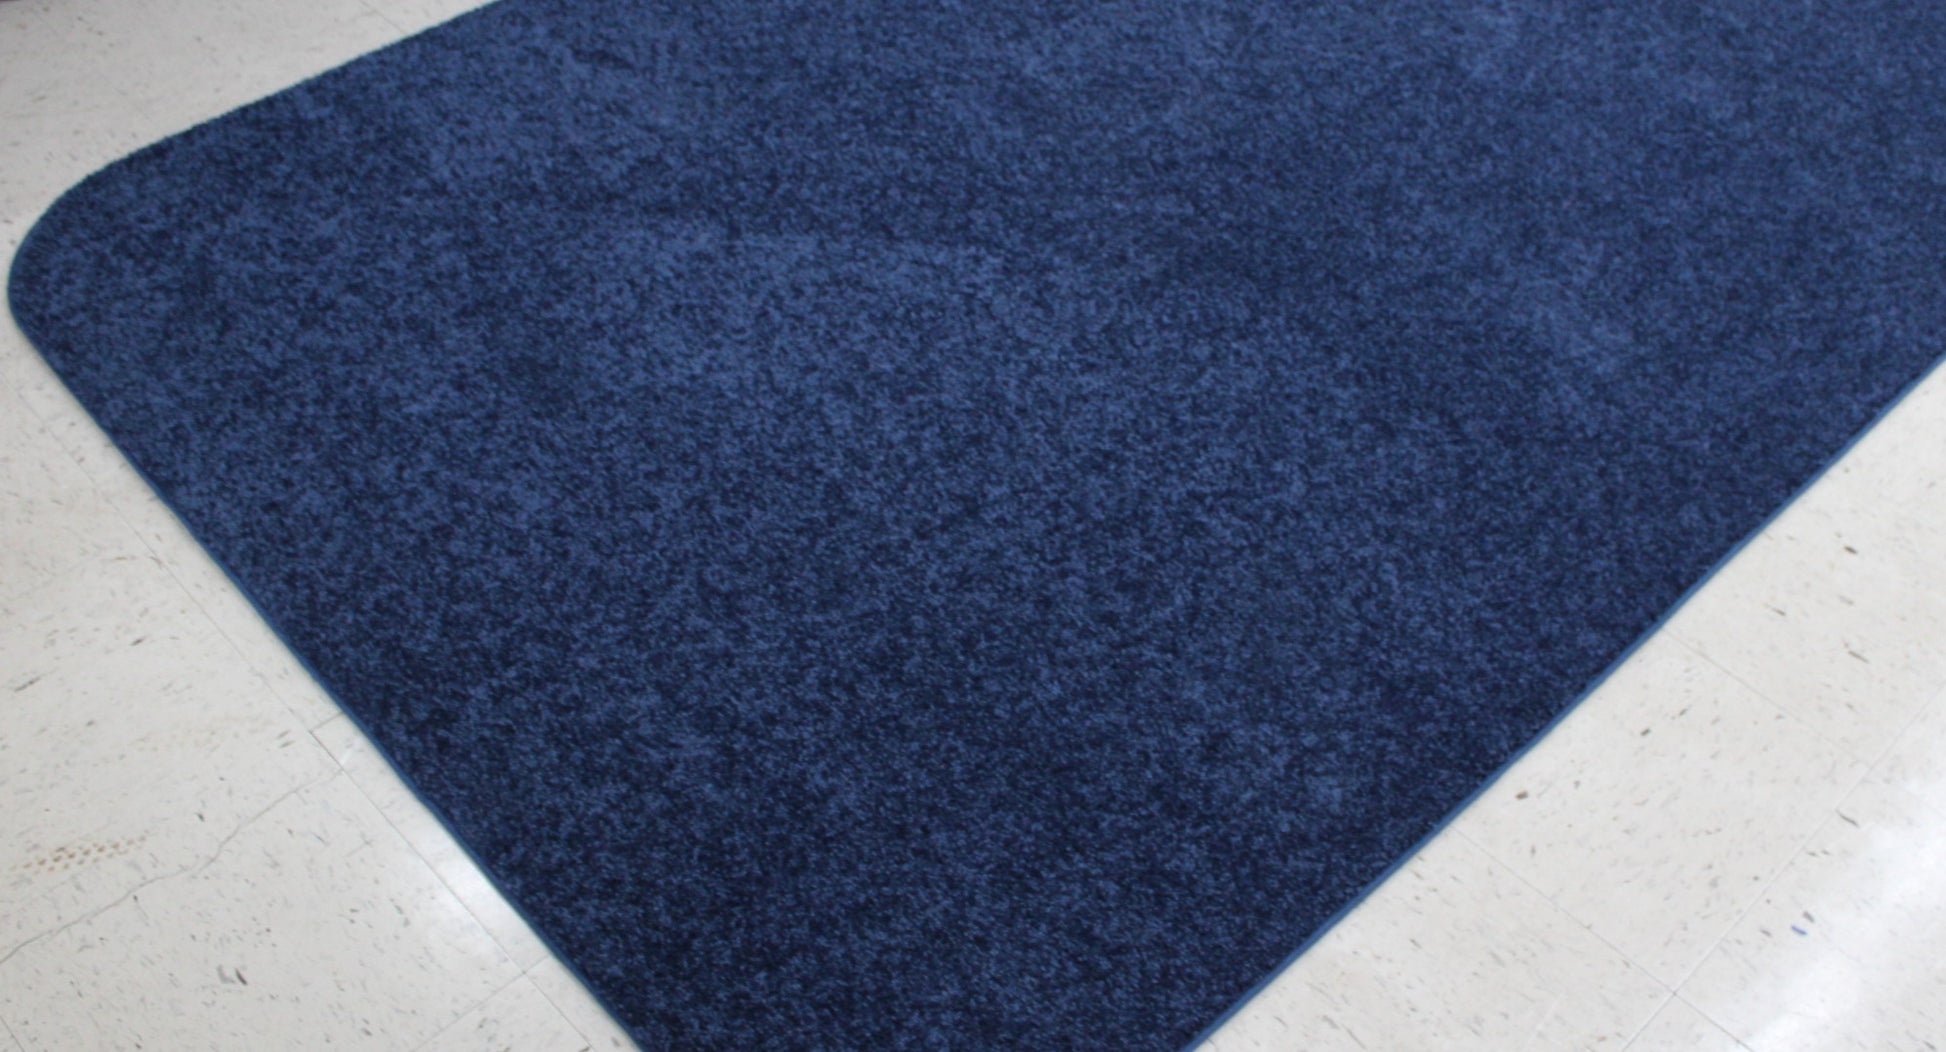 Darkest Navy Blue Area Rug on tile floor